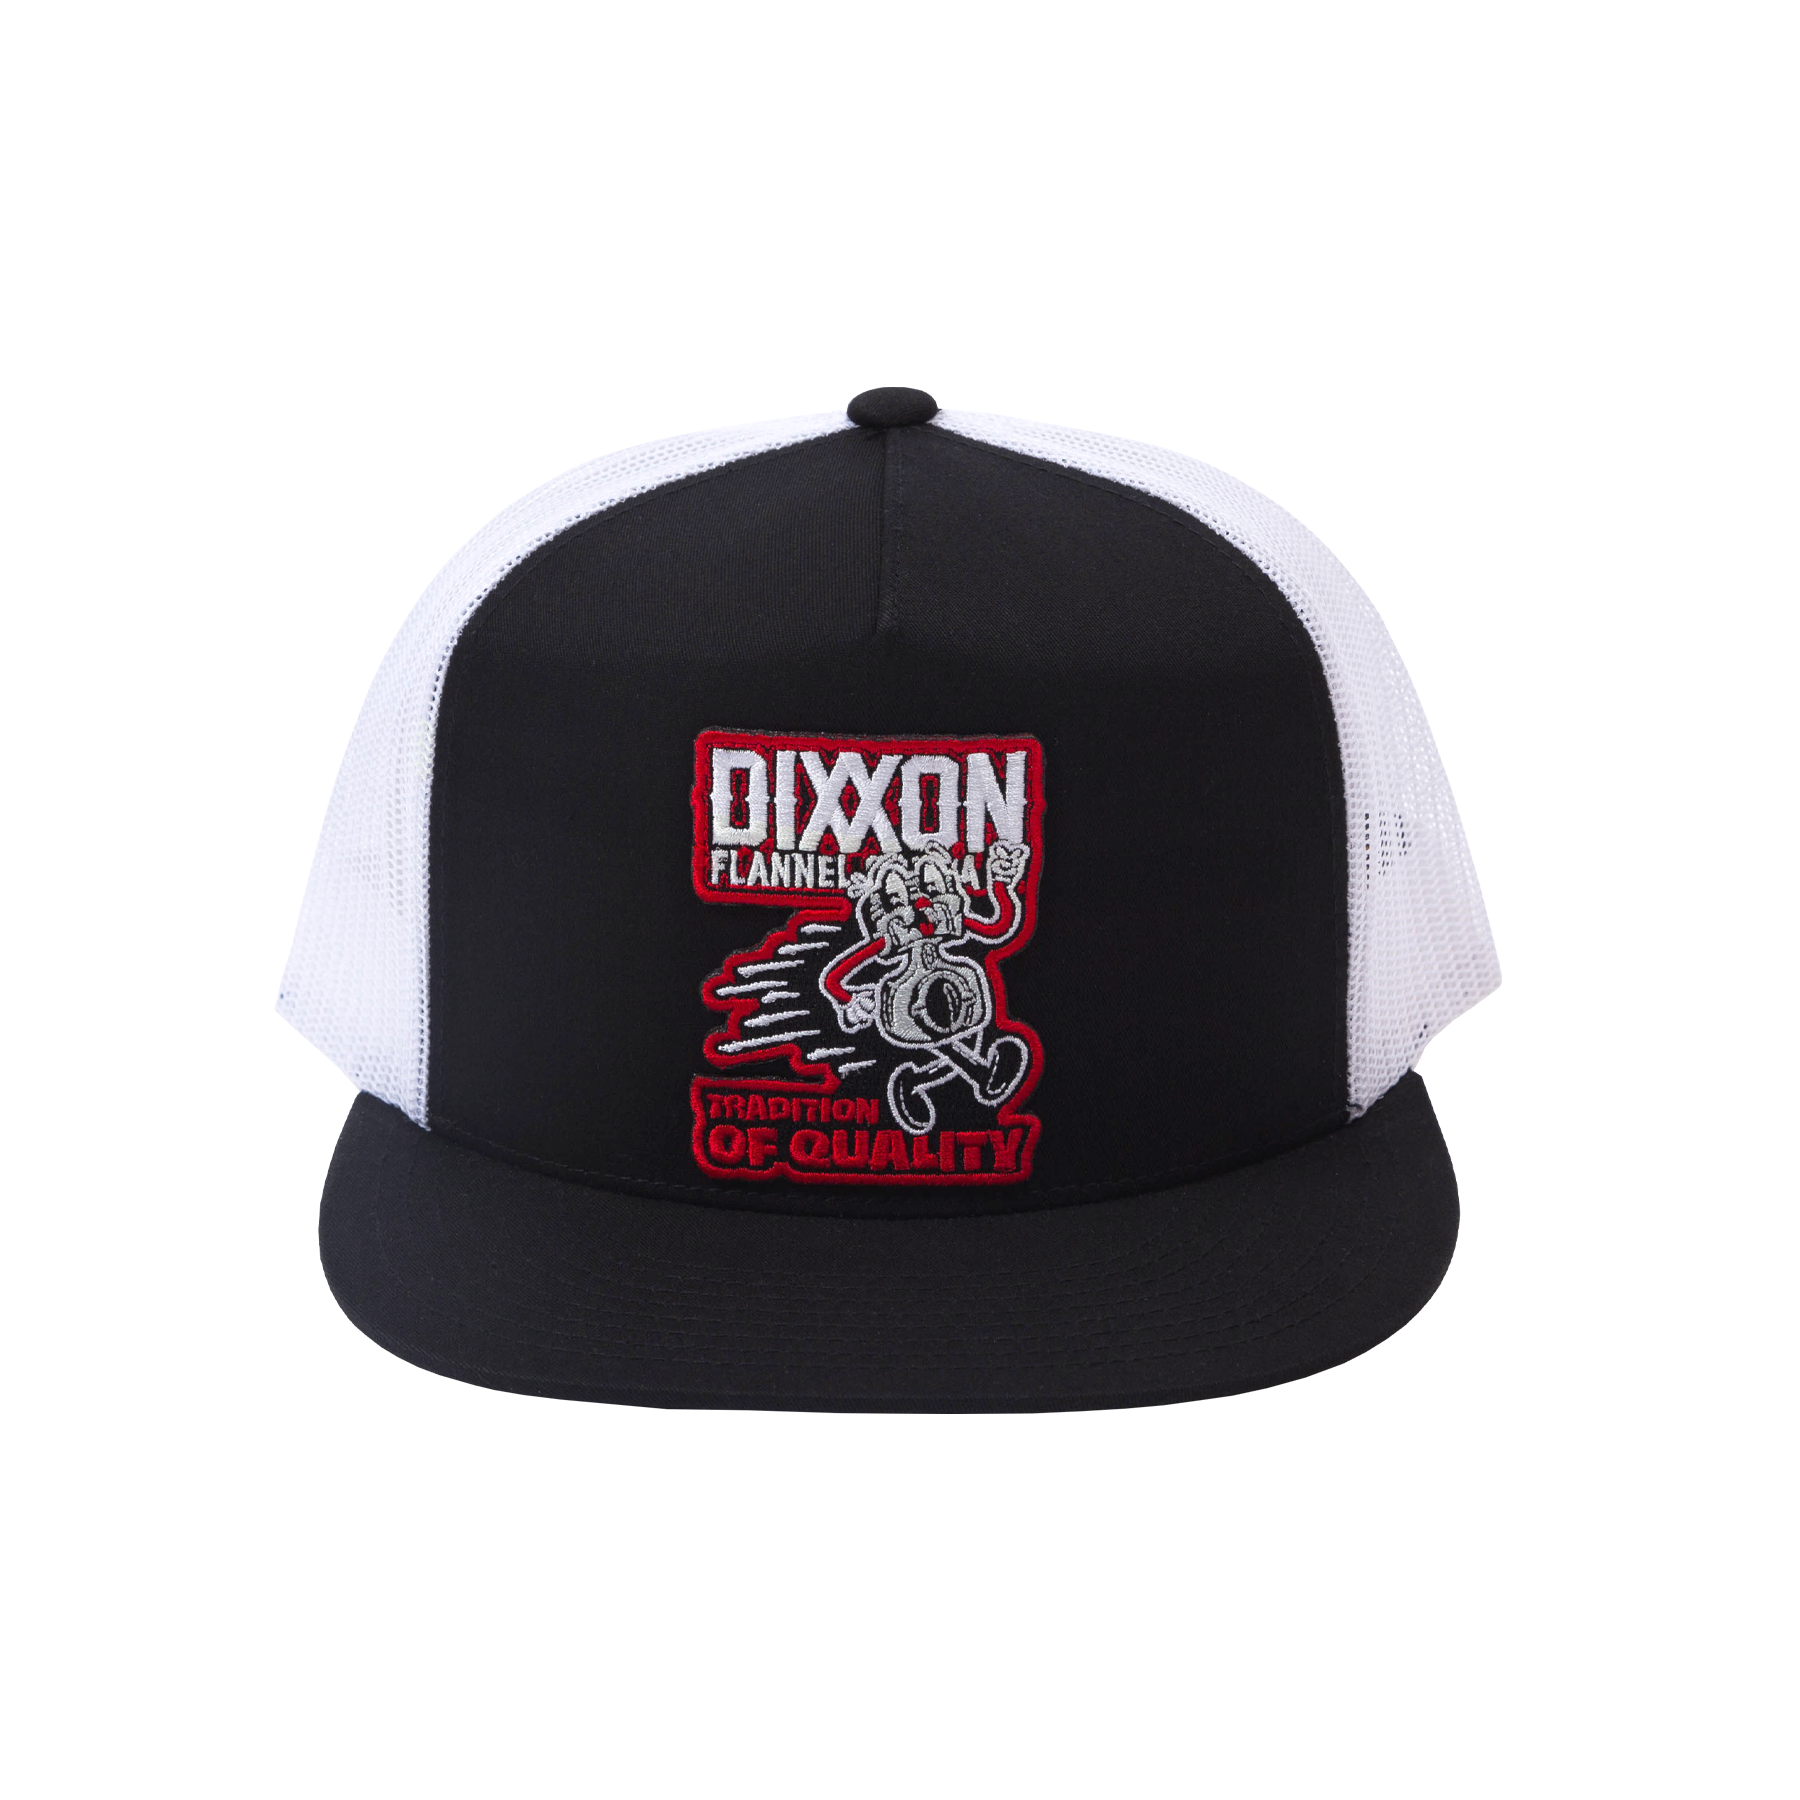 Tradition of Quality Snapback Trucker Cap - Black & White - Dixxon Flannel Co.